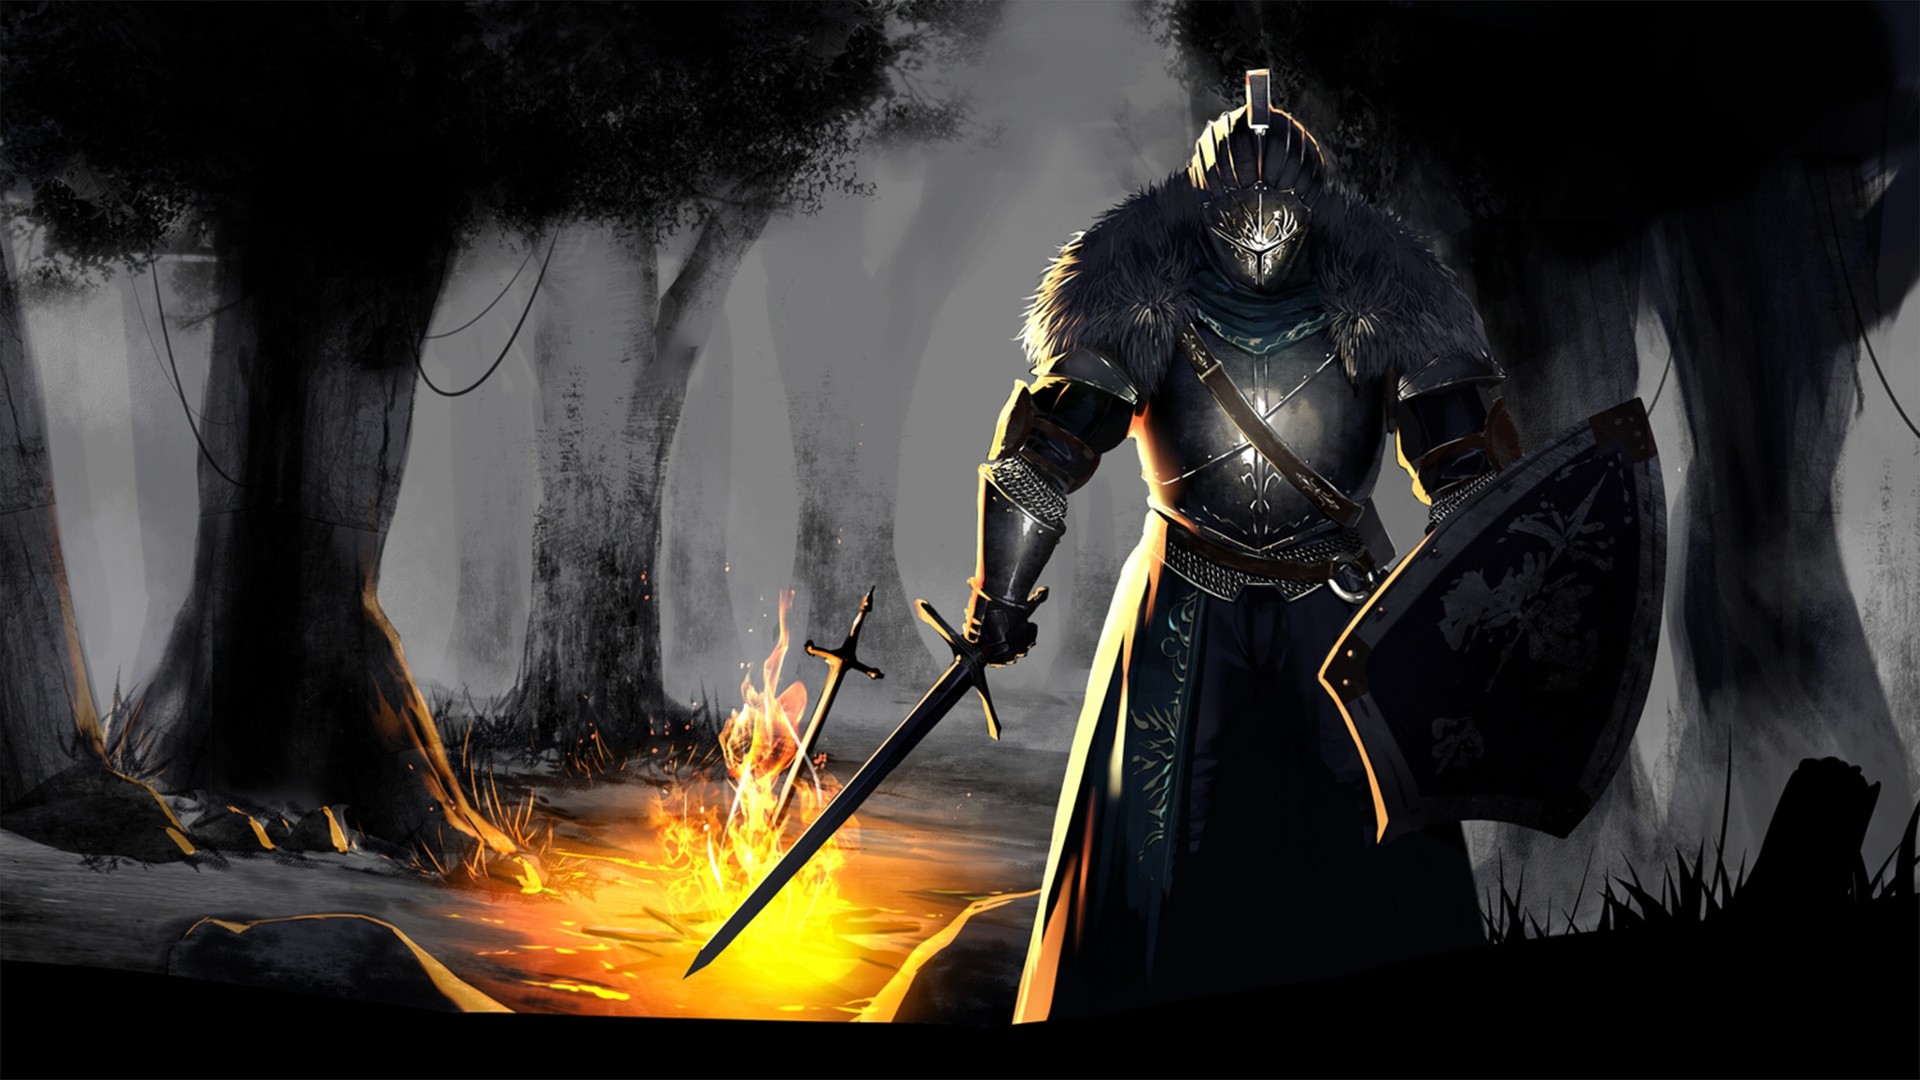 General 1920x1080 Dark Souls forest Dark Souls III fantasy art video games Dark Souls II video game art sword shield armor